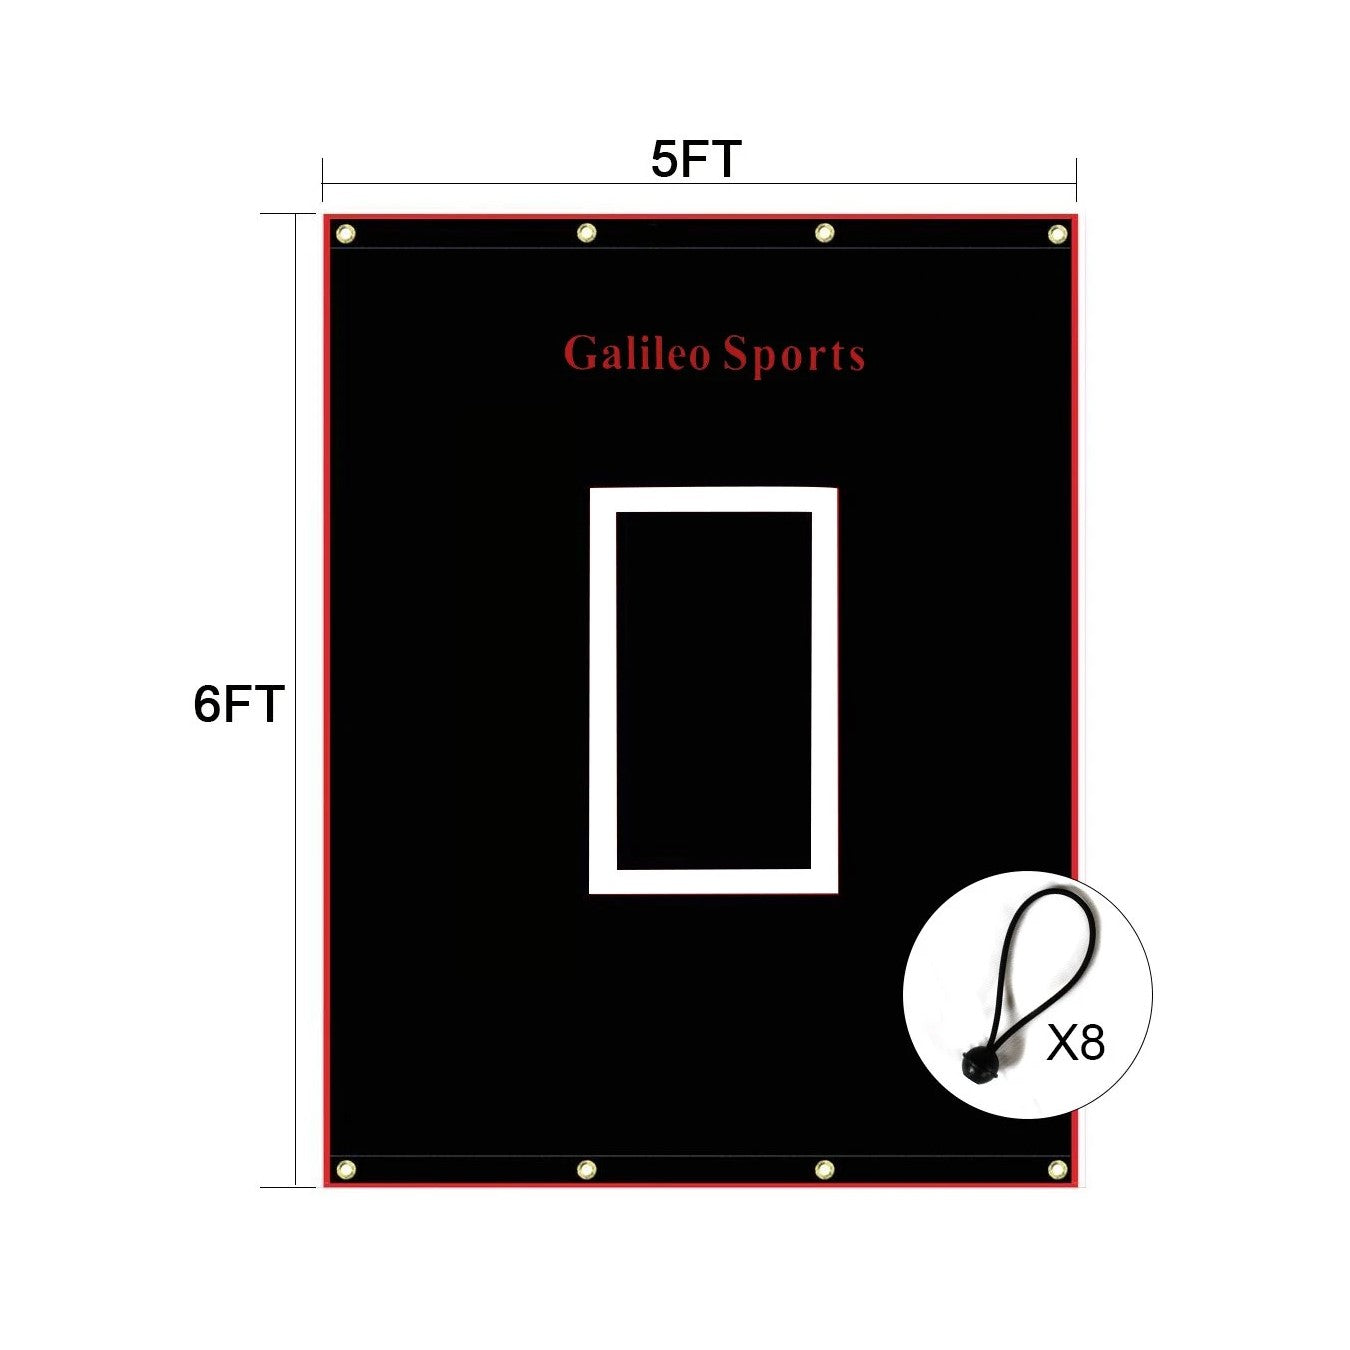 5X6 Galileo ソフトボール バックストップ/Viny バックストップ ピッチング ターゲット